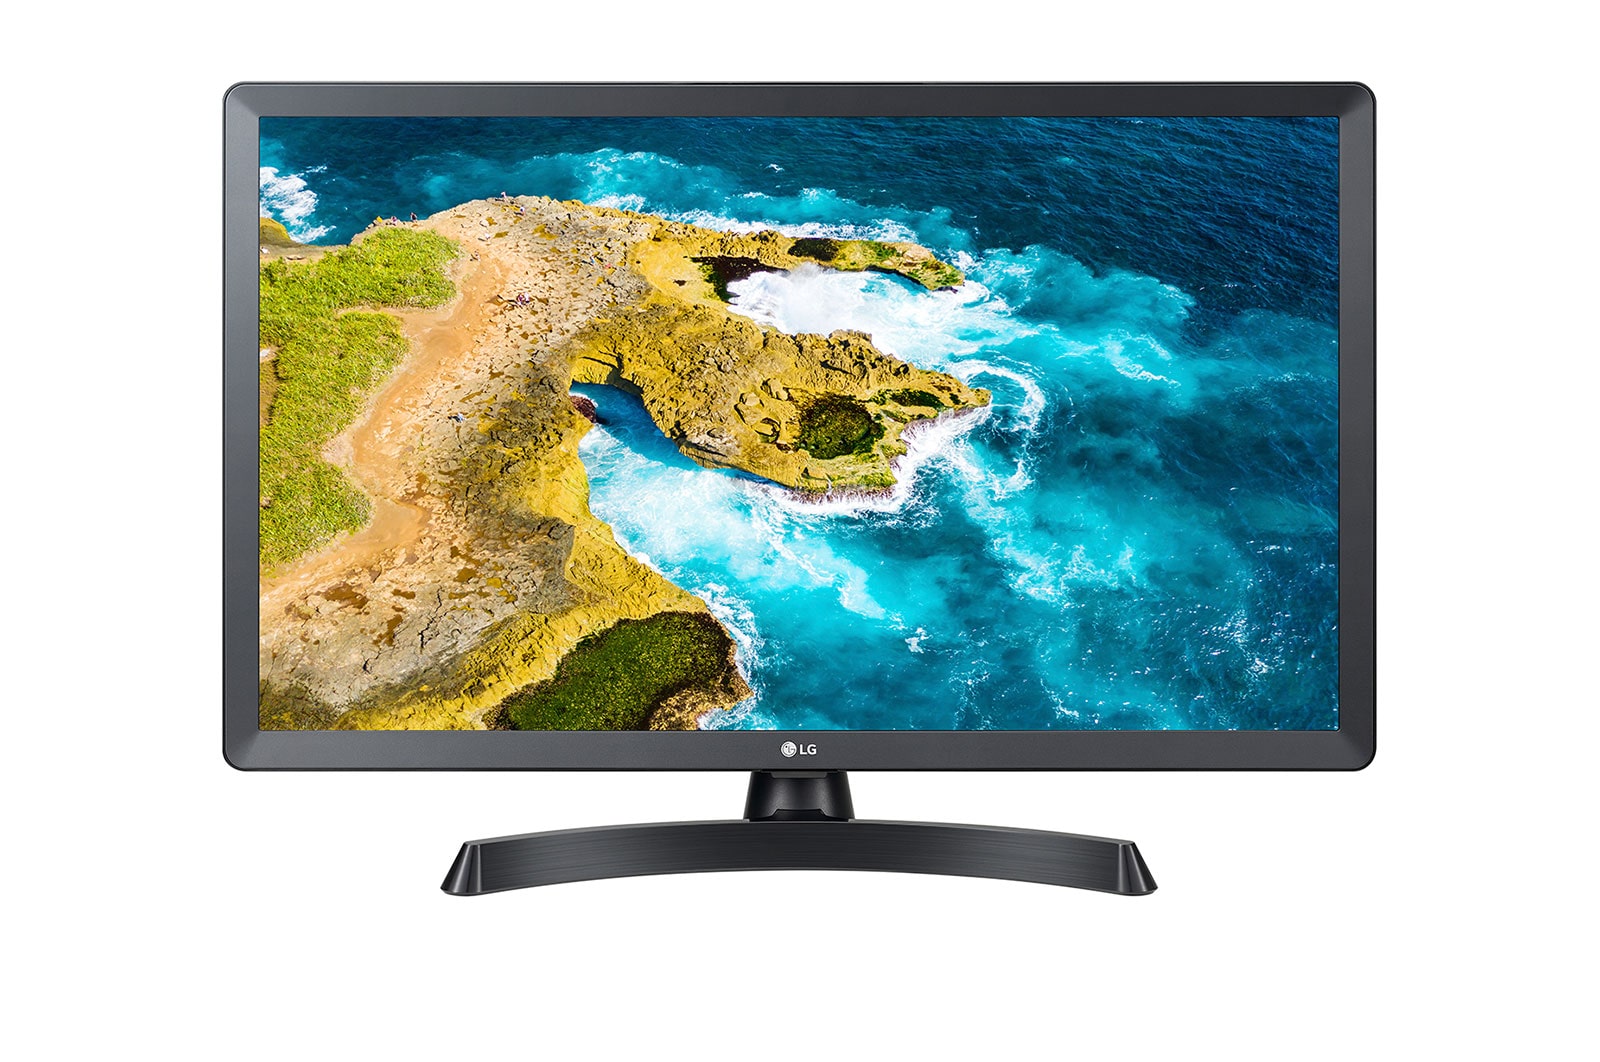 LG Monitor TV LED 28” 16:9 HD Ready Smart - 28TN515S-PZ